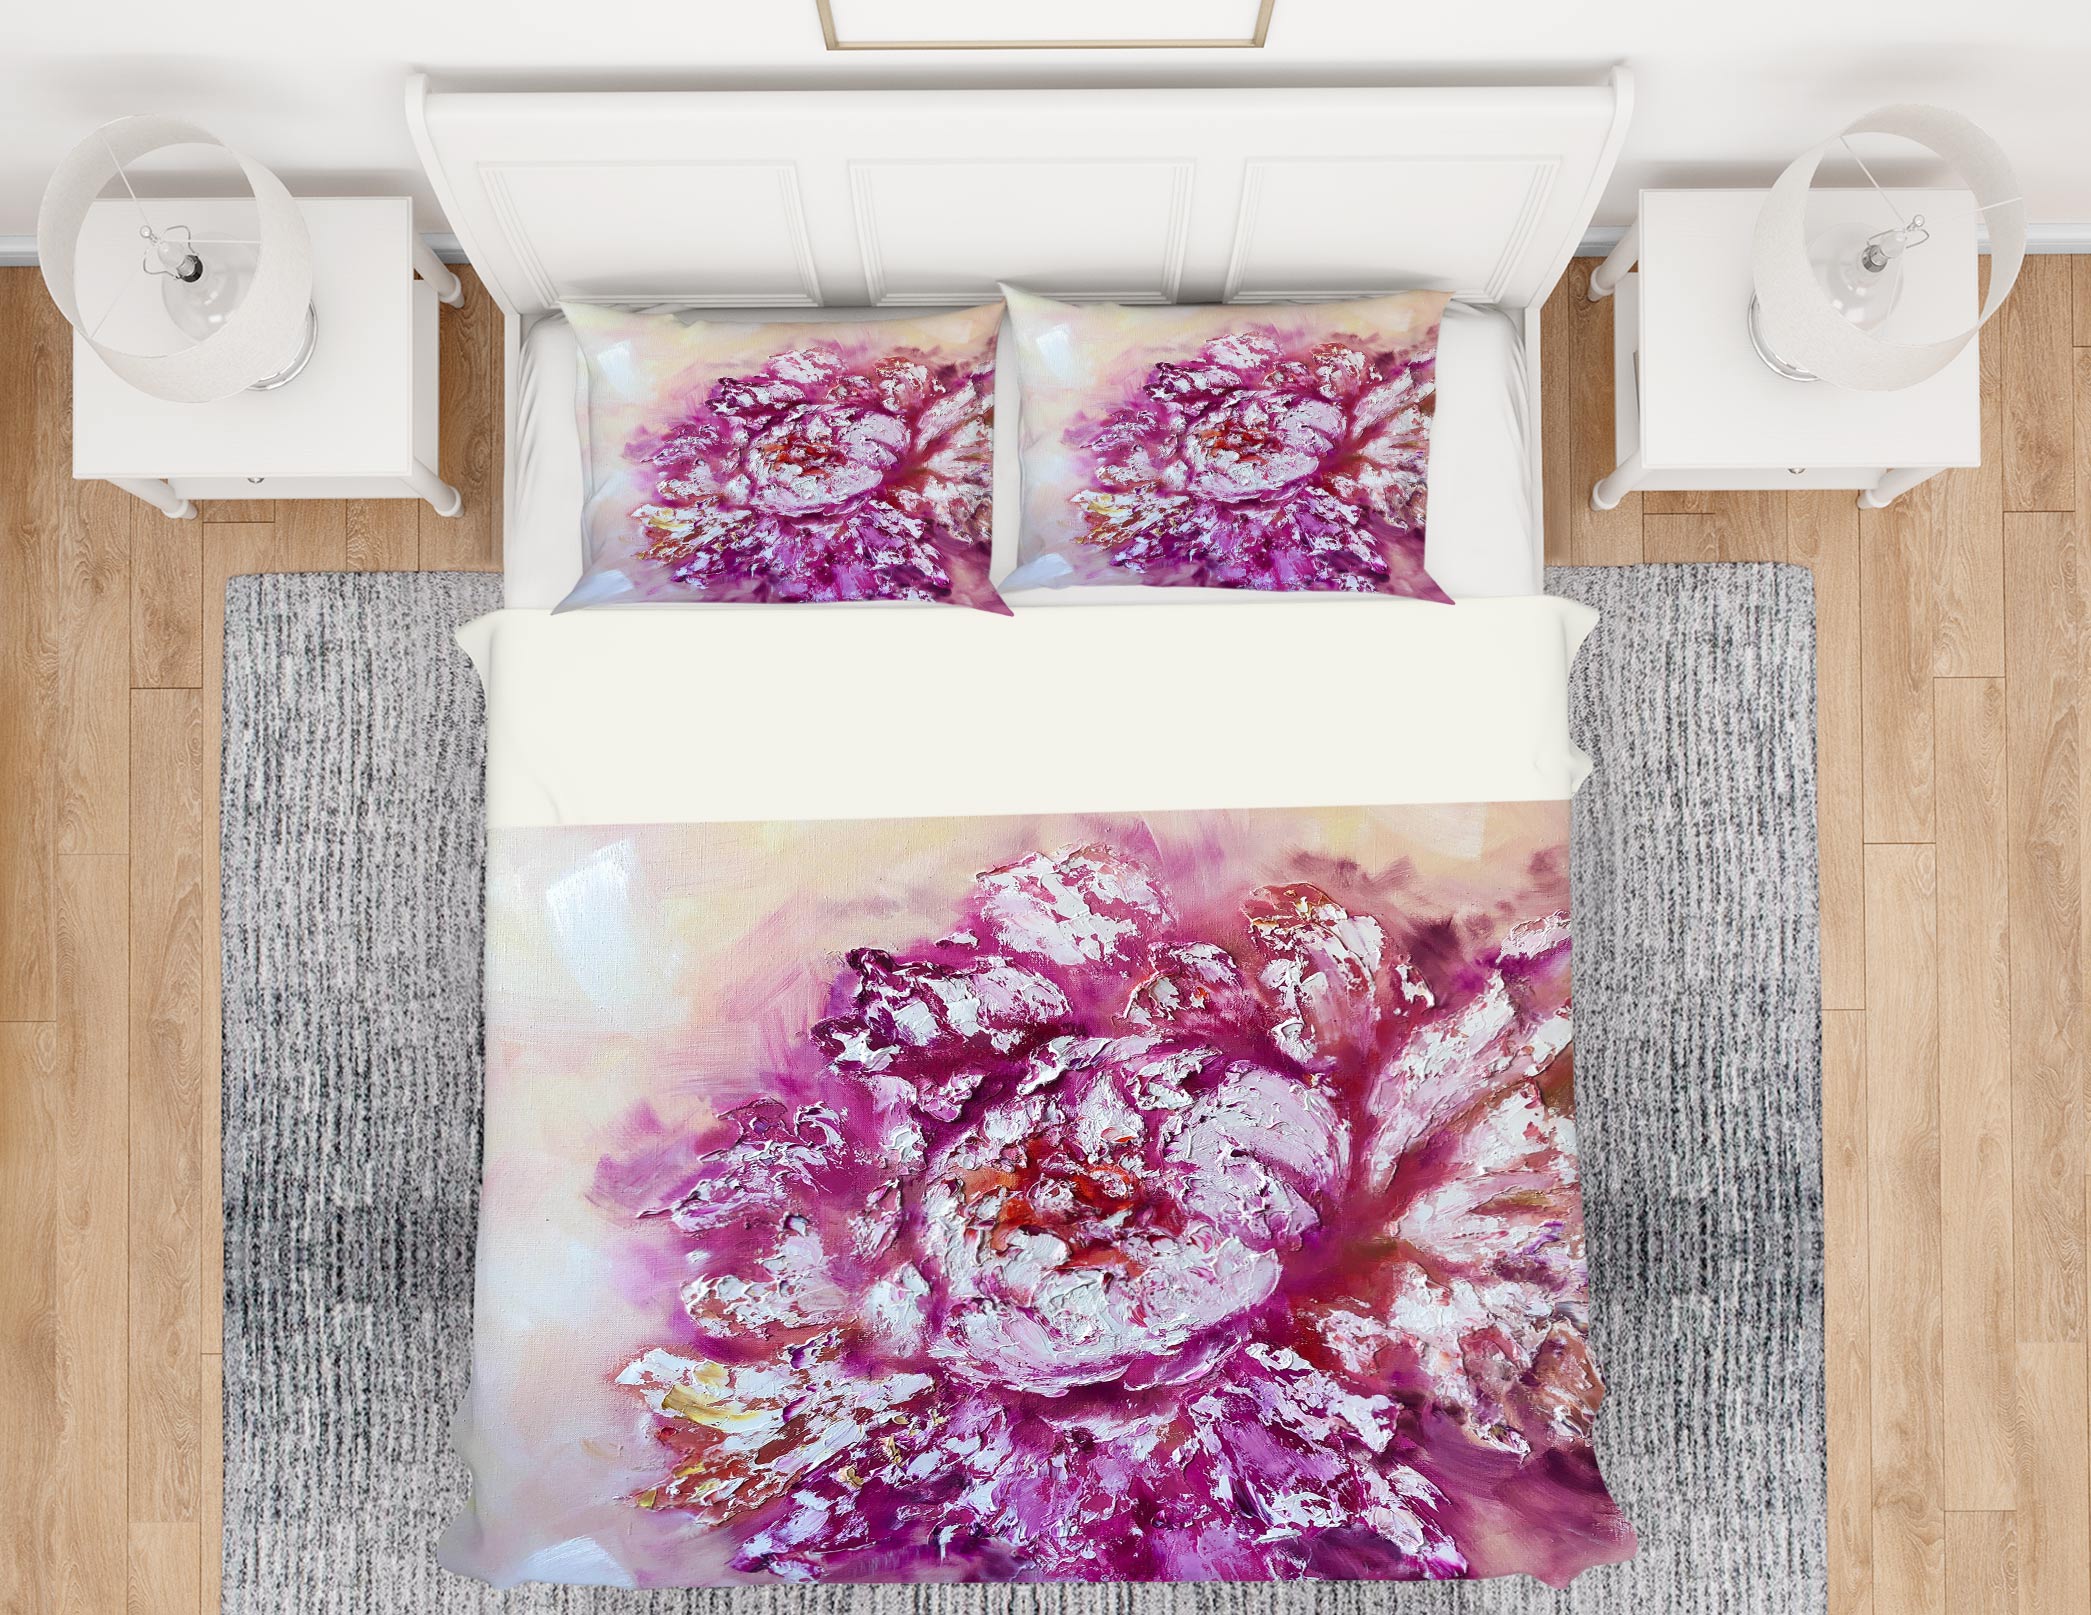 3D Purple Flower 428 Skromova Marina Bedding Bed Pillowcases Quilt